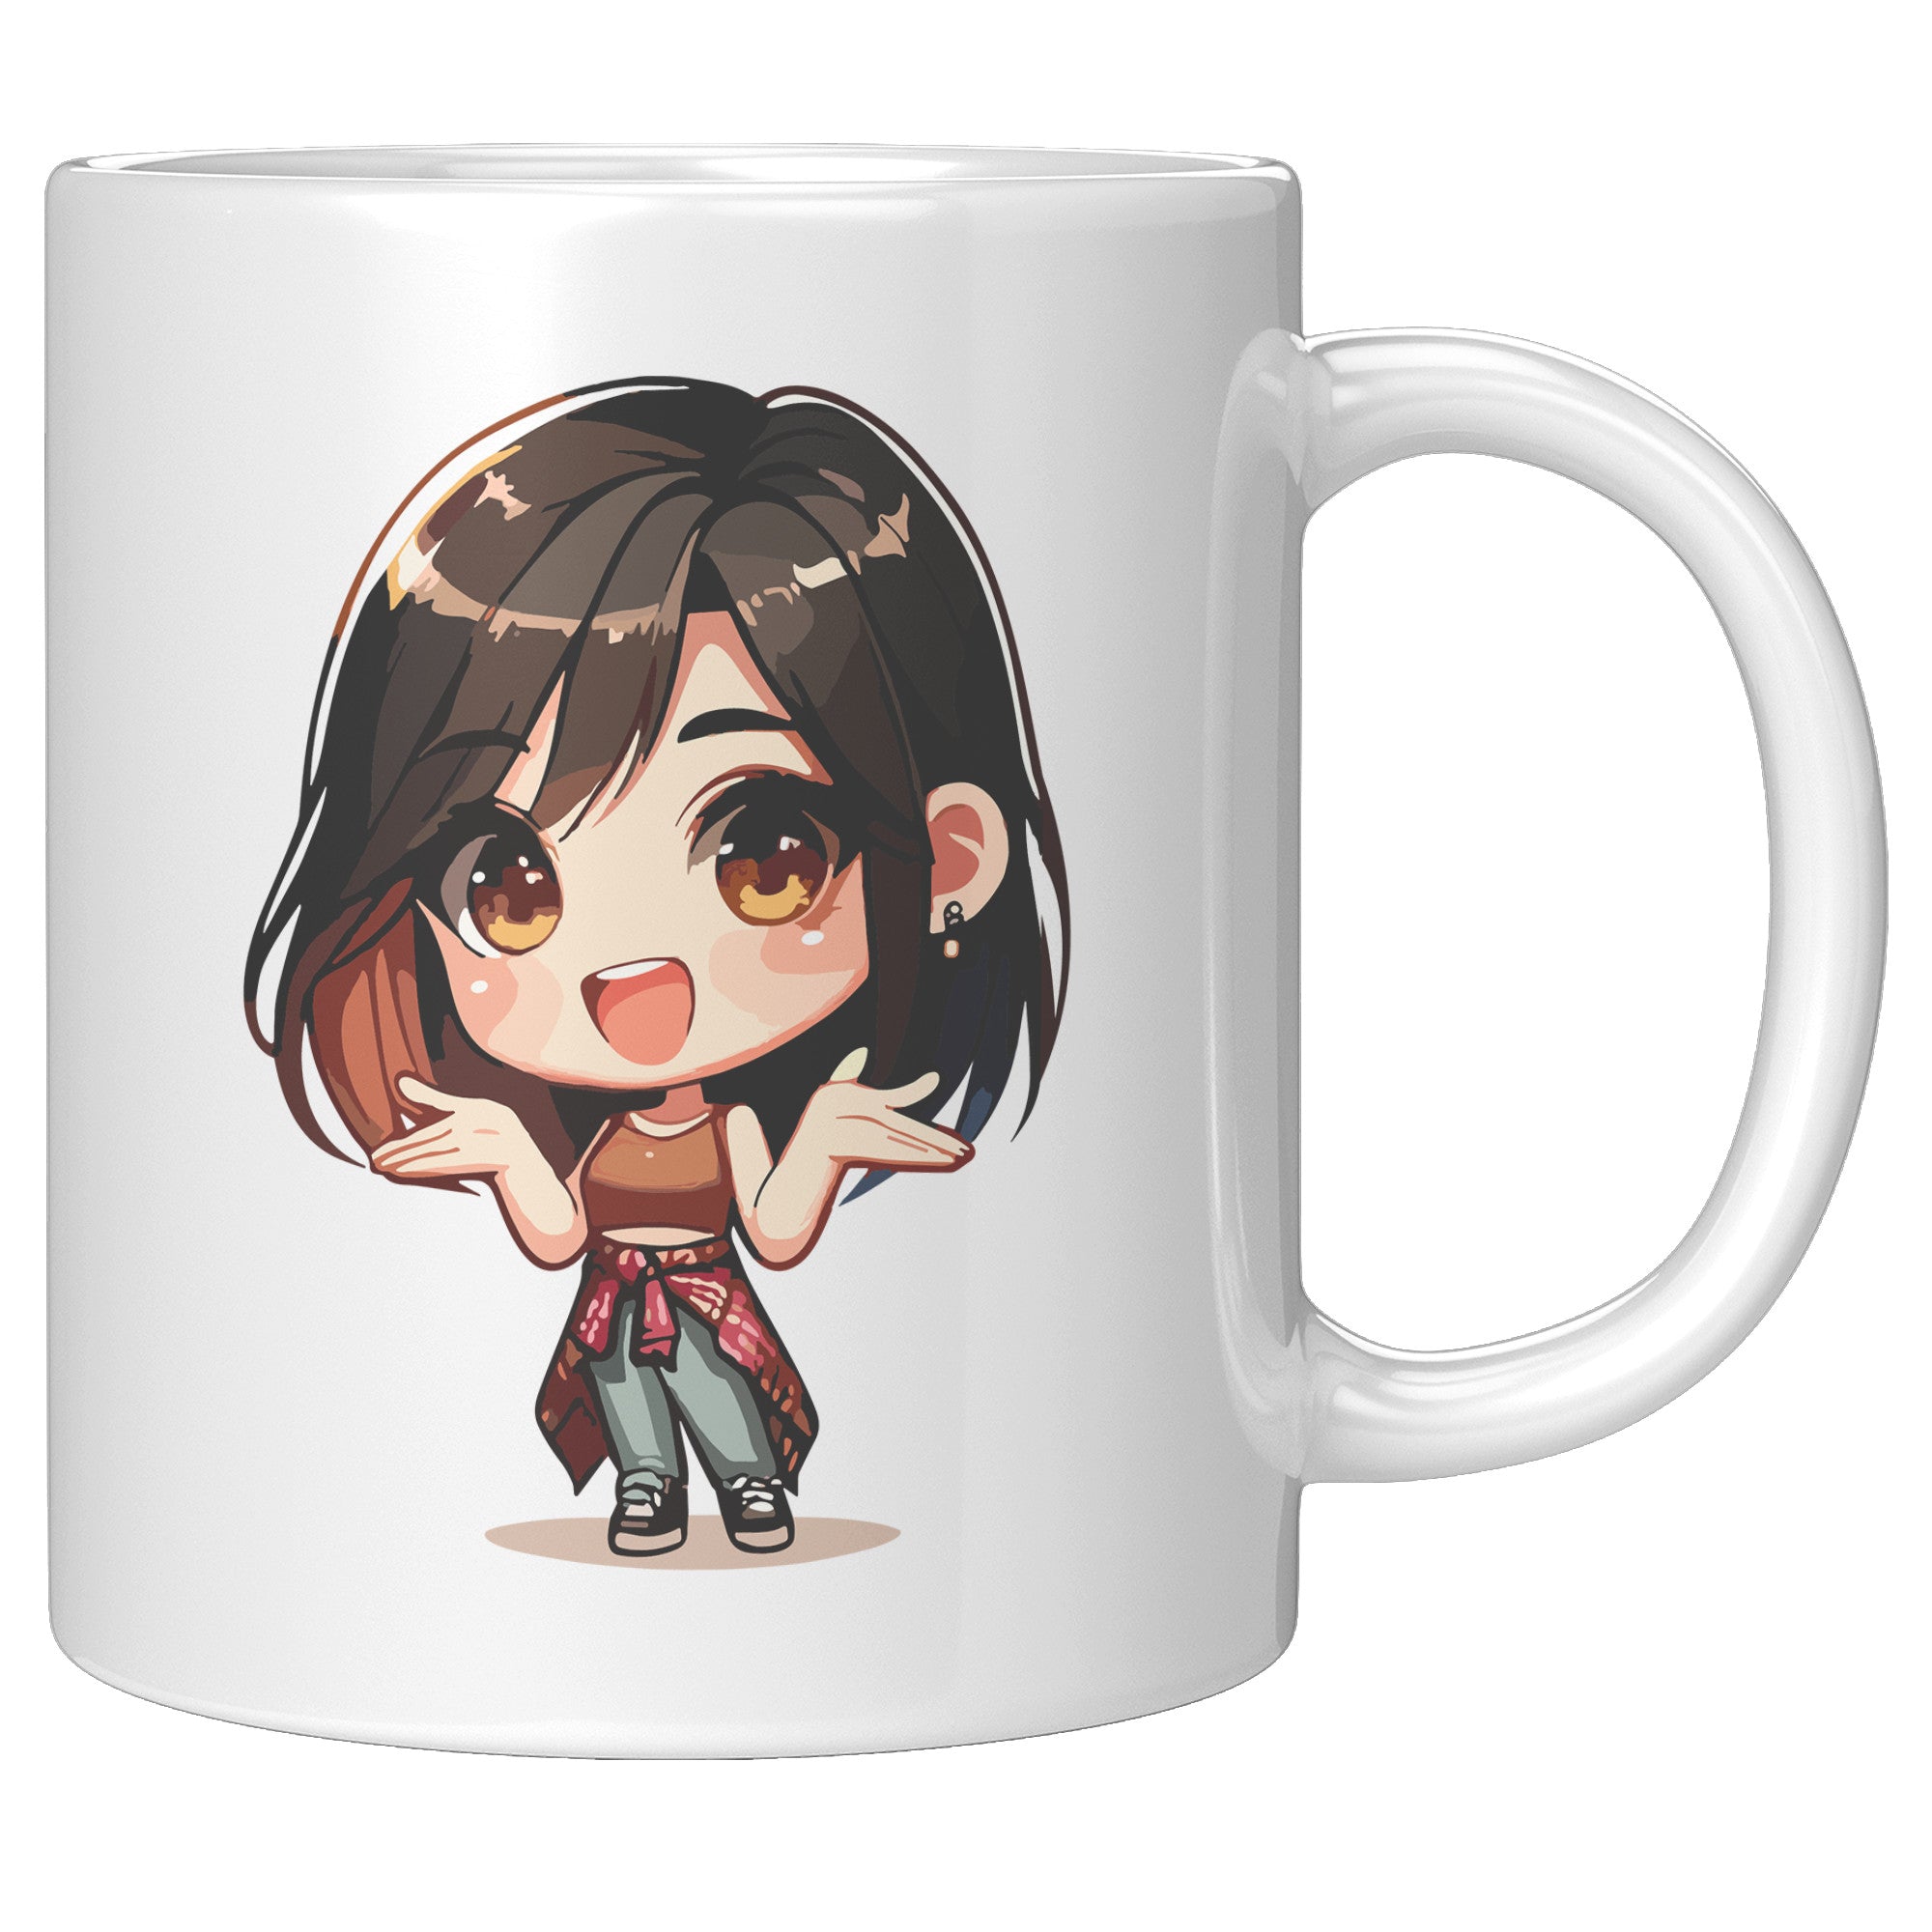 "Marites Gossip Queen Coffee Mug - Cute Cartoon 'Ano Ang Latest?' Cup - Perfect Chismosa Gift - Filipino Slang Tea Mug" - KK